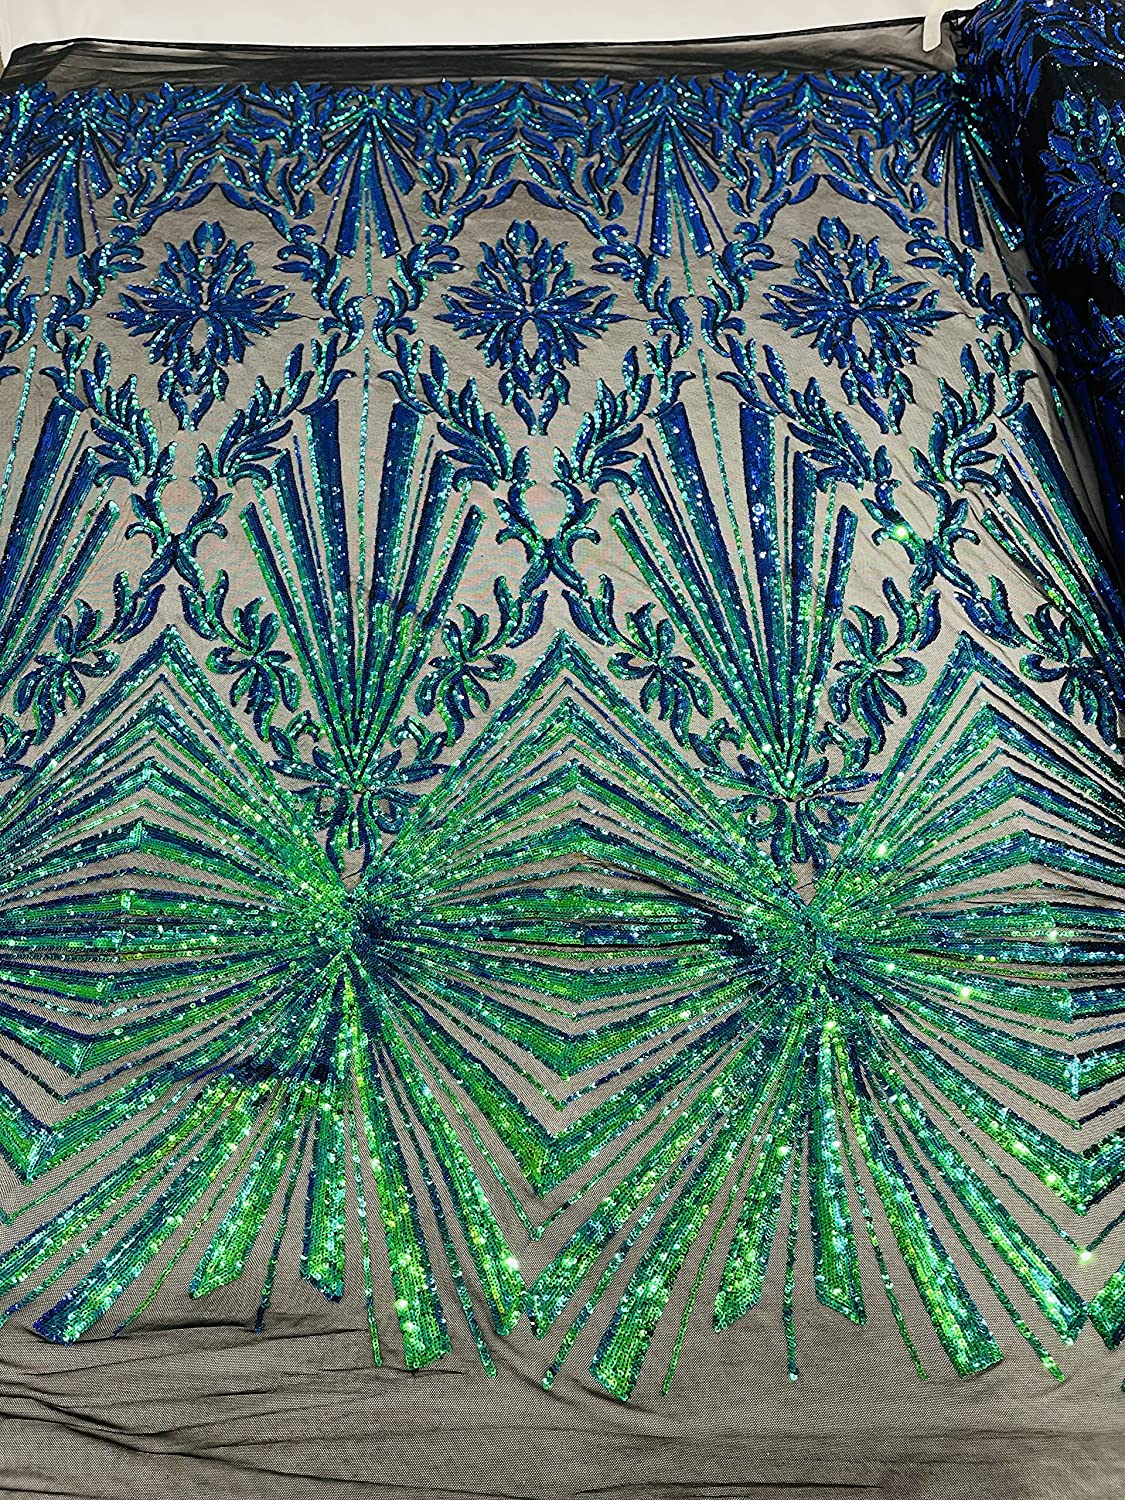 Diamond Damask Design On A Nude 4 Way Stretch Mesh/Prom Fabric (1 Yard, Green Iridescent on Black)